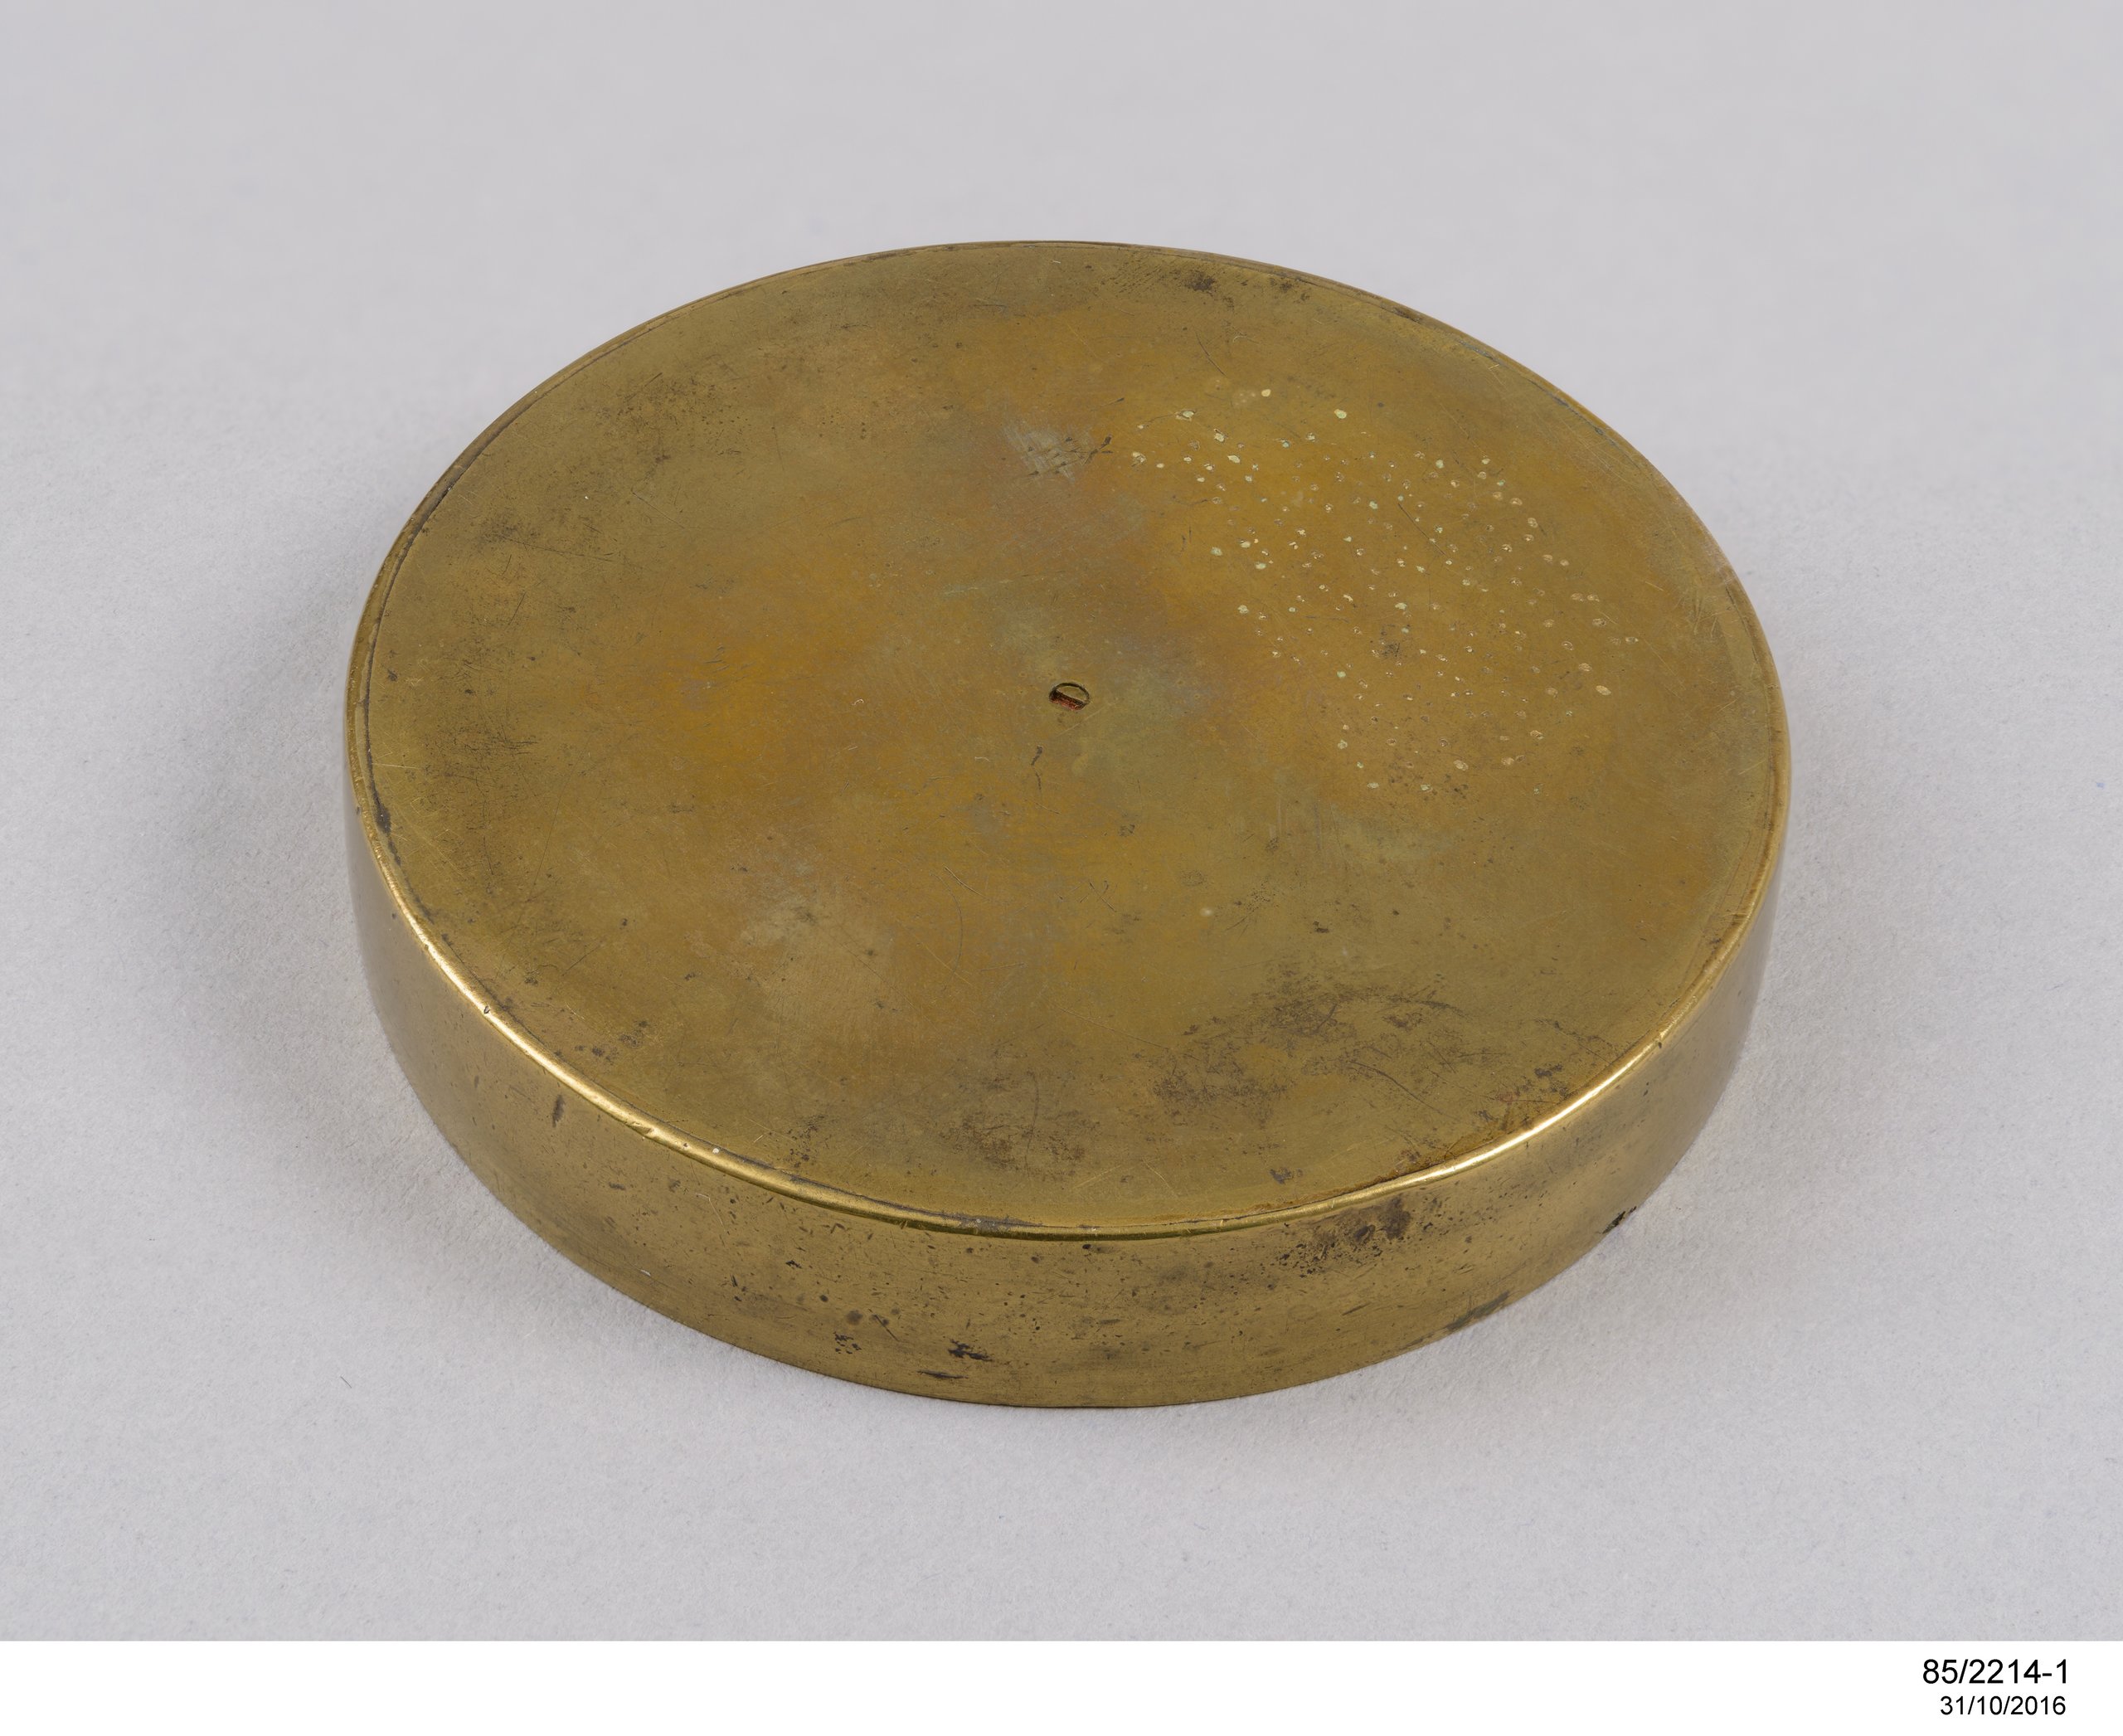 Compass in brass casing